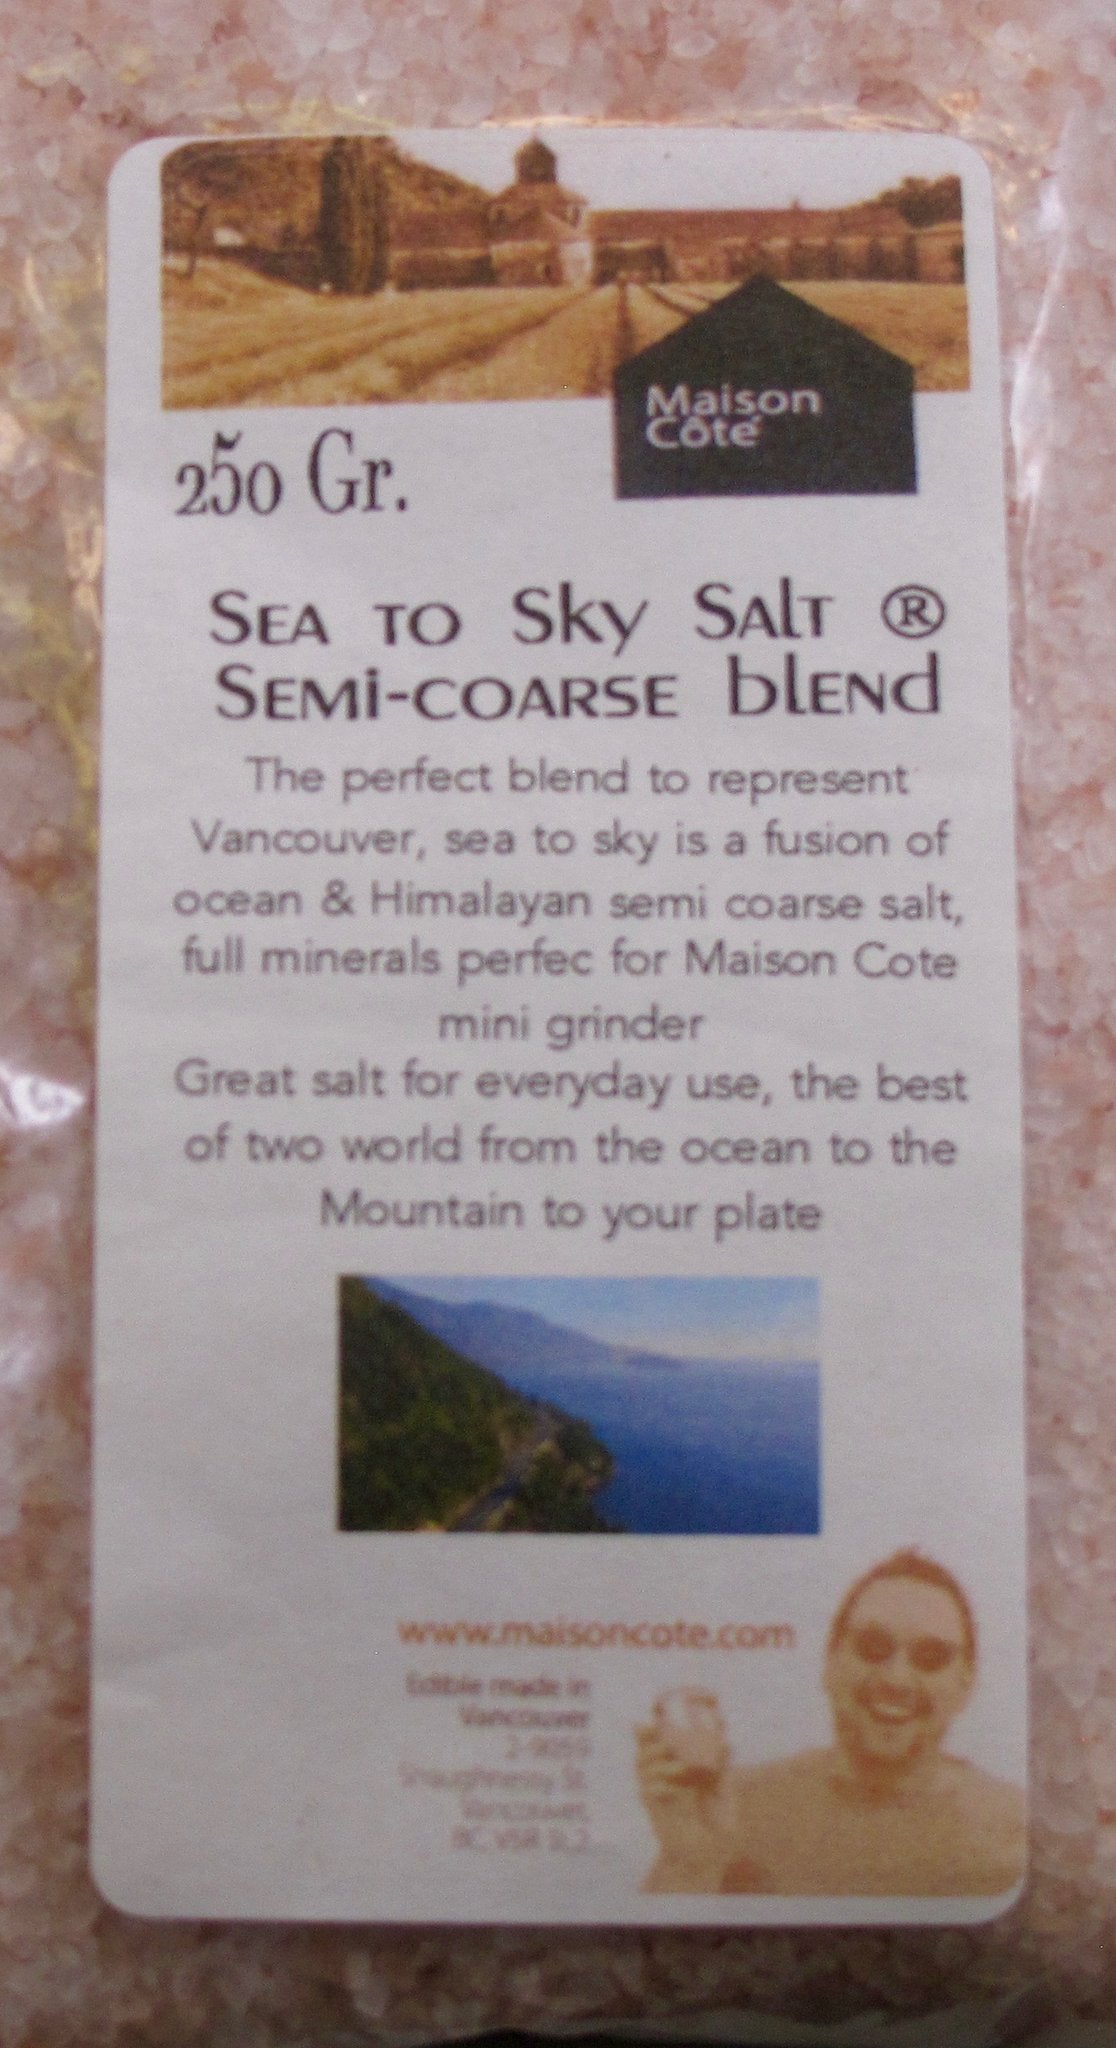 Sea to Sky Salt - Semi-coarse blend